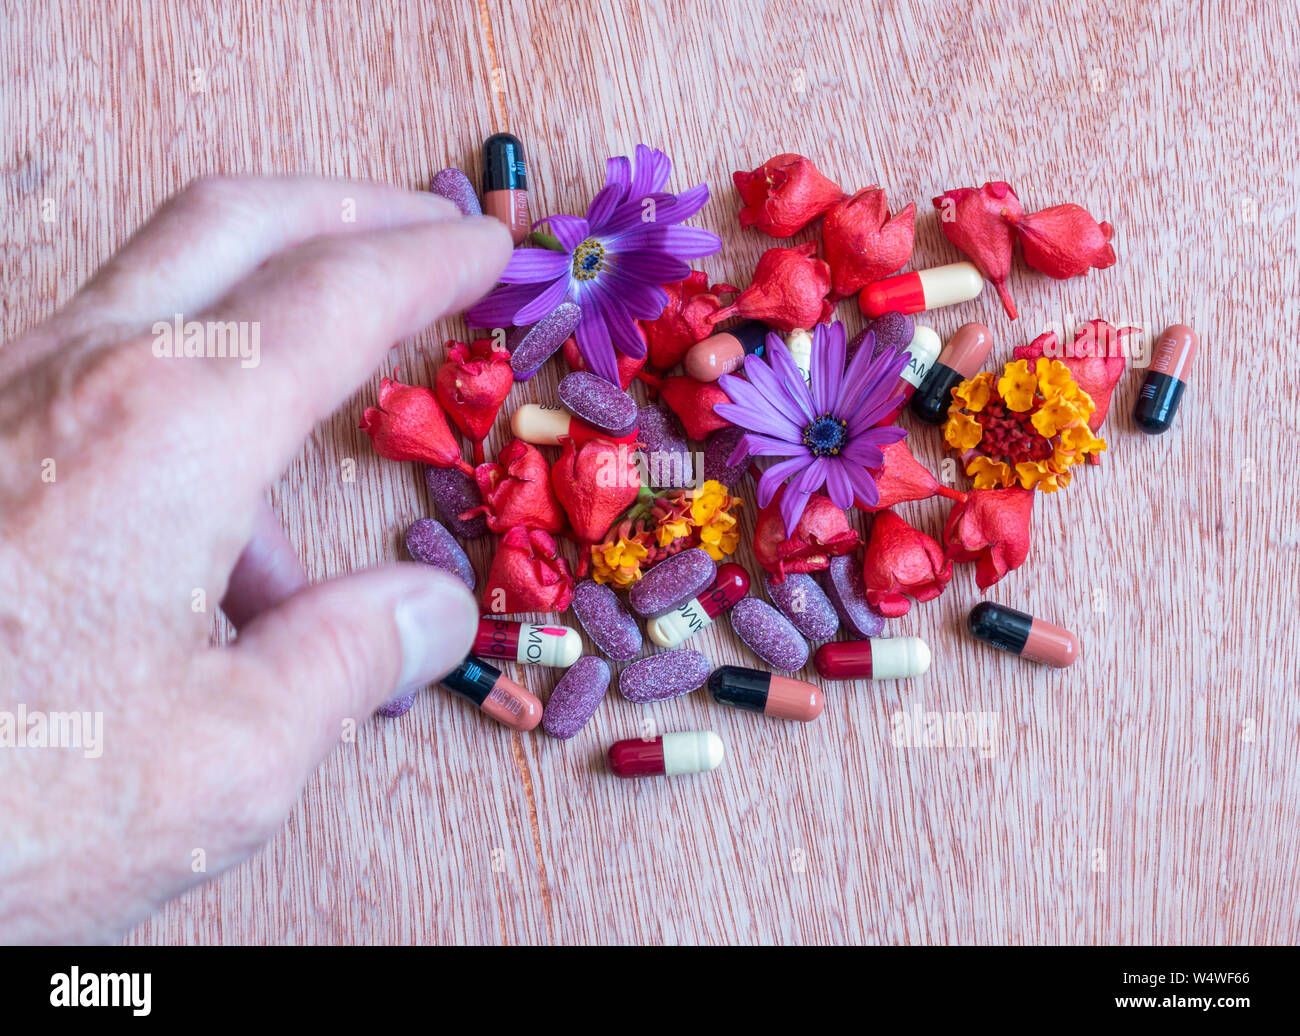 Amoxicillin and Flucloxacillin antibiotics, flowers and herbal pills. Homeopathy, alternative medicine..., concept image Stock Photo